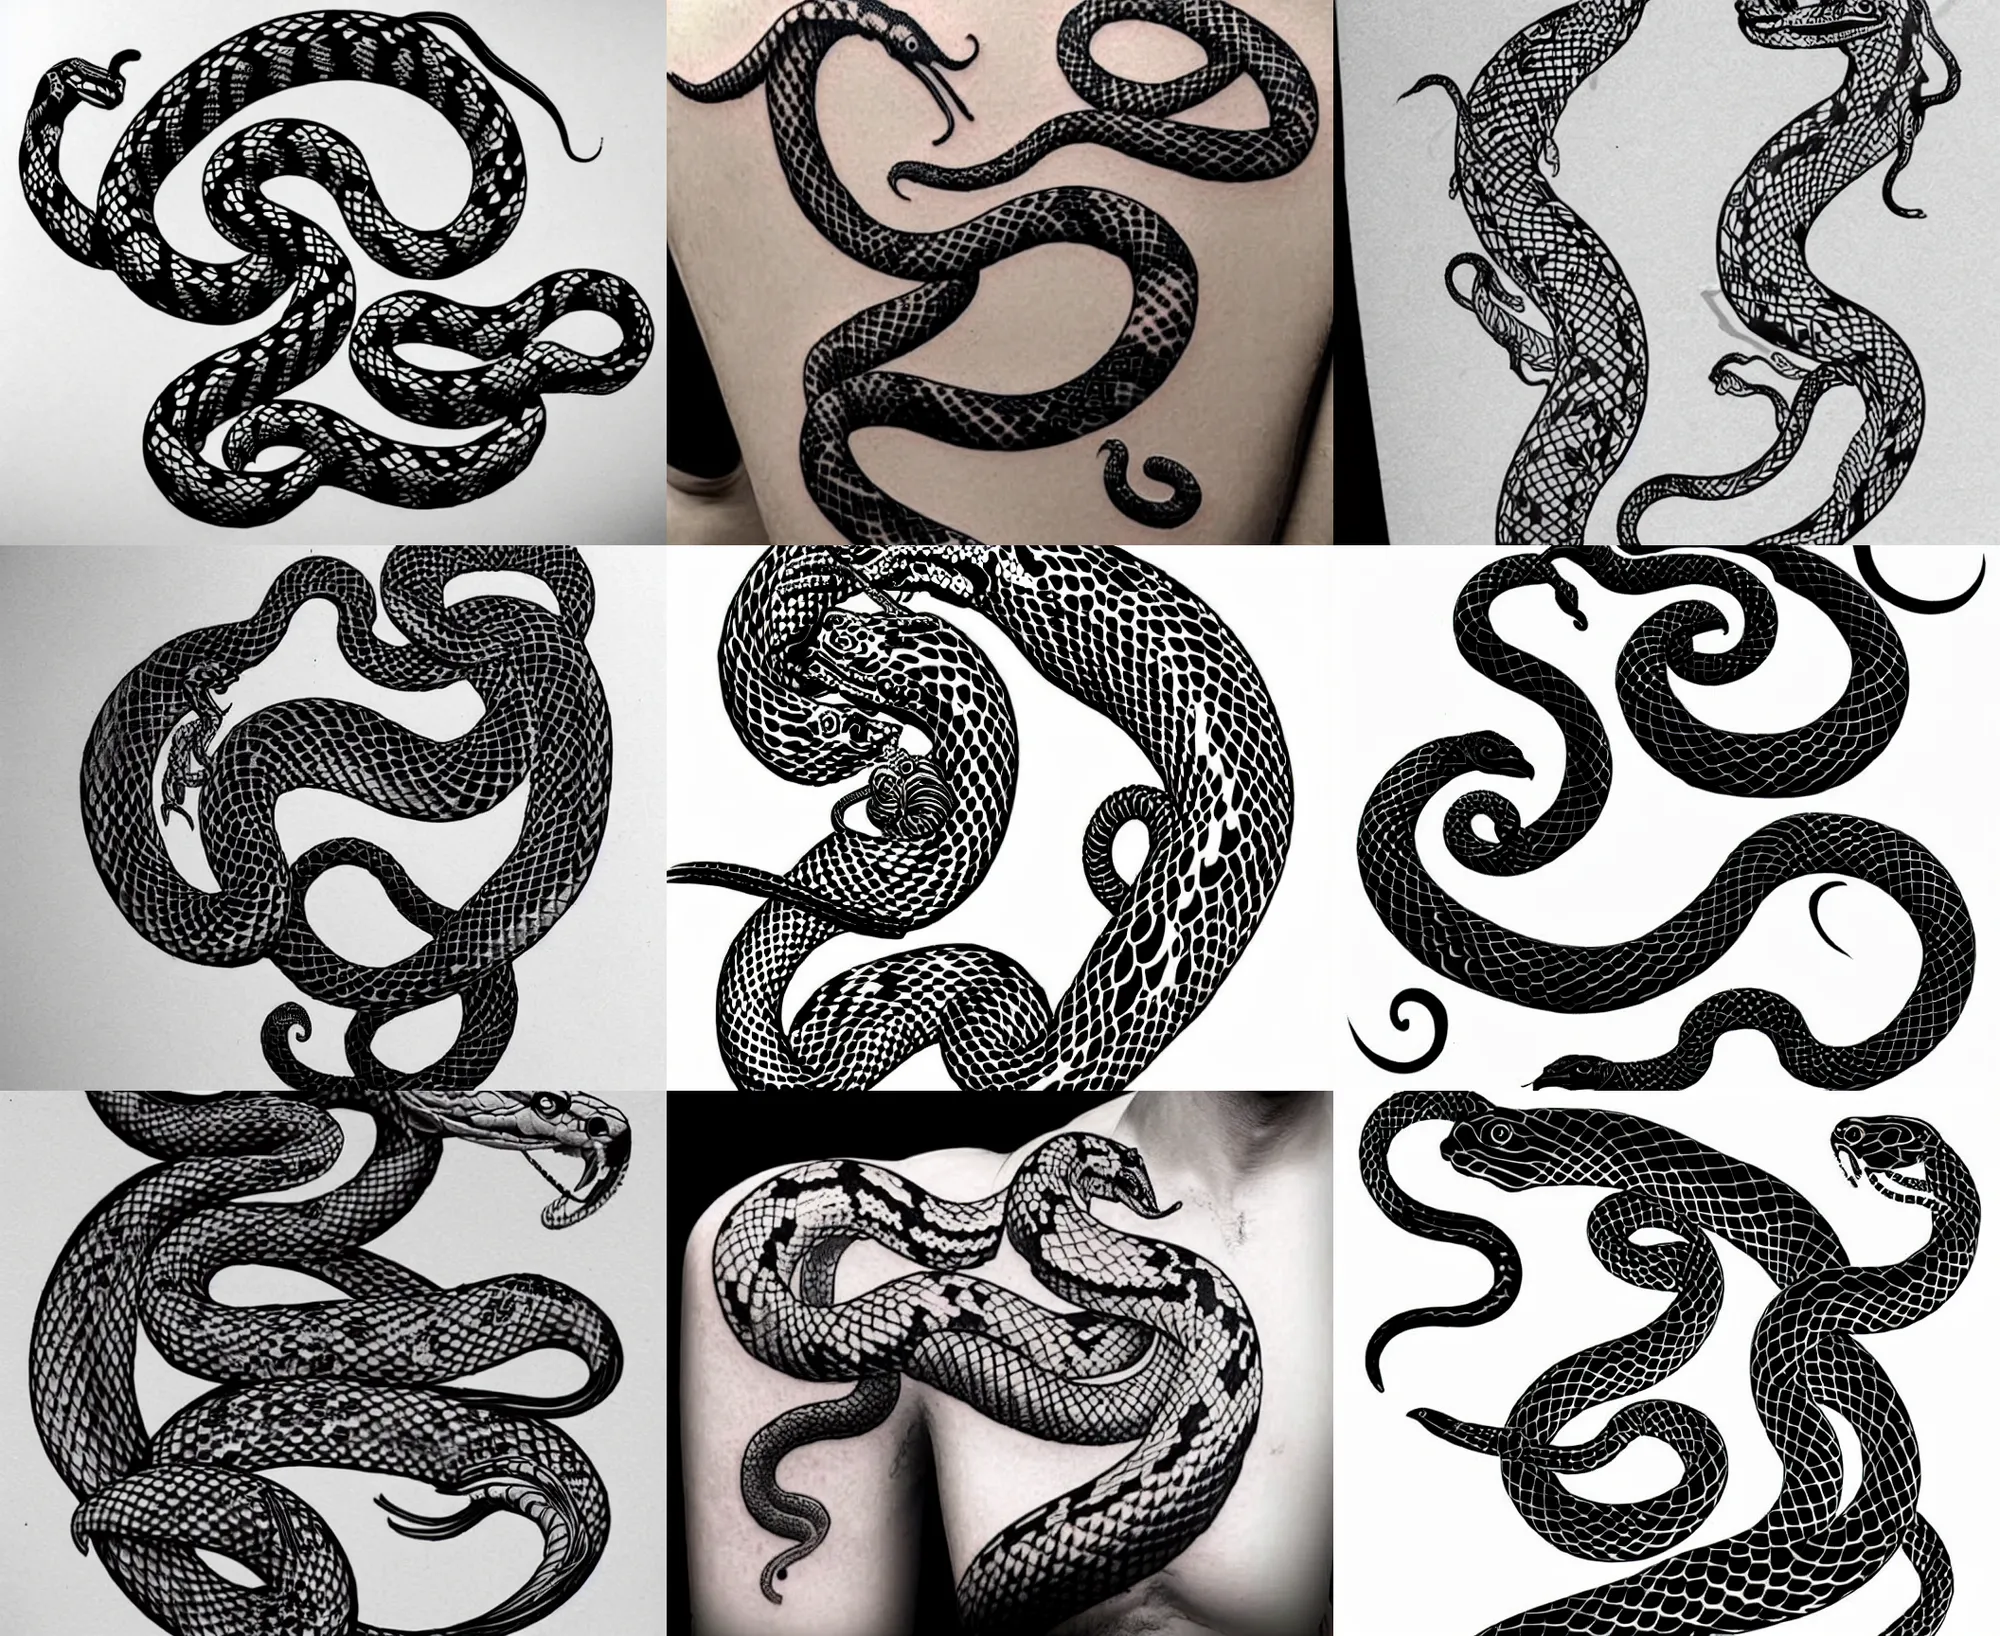 Aggregate 100 about snake tattoo design unmissable  indaotaonec